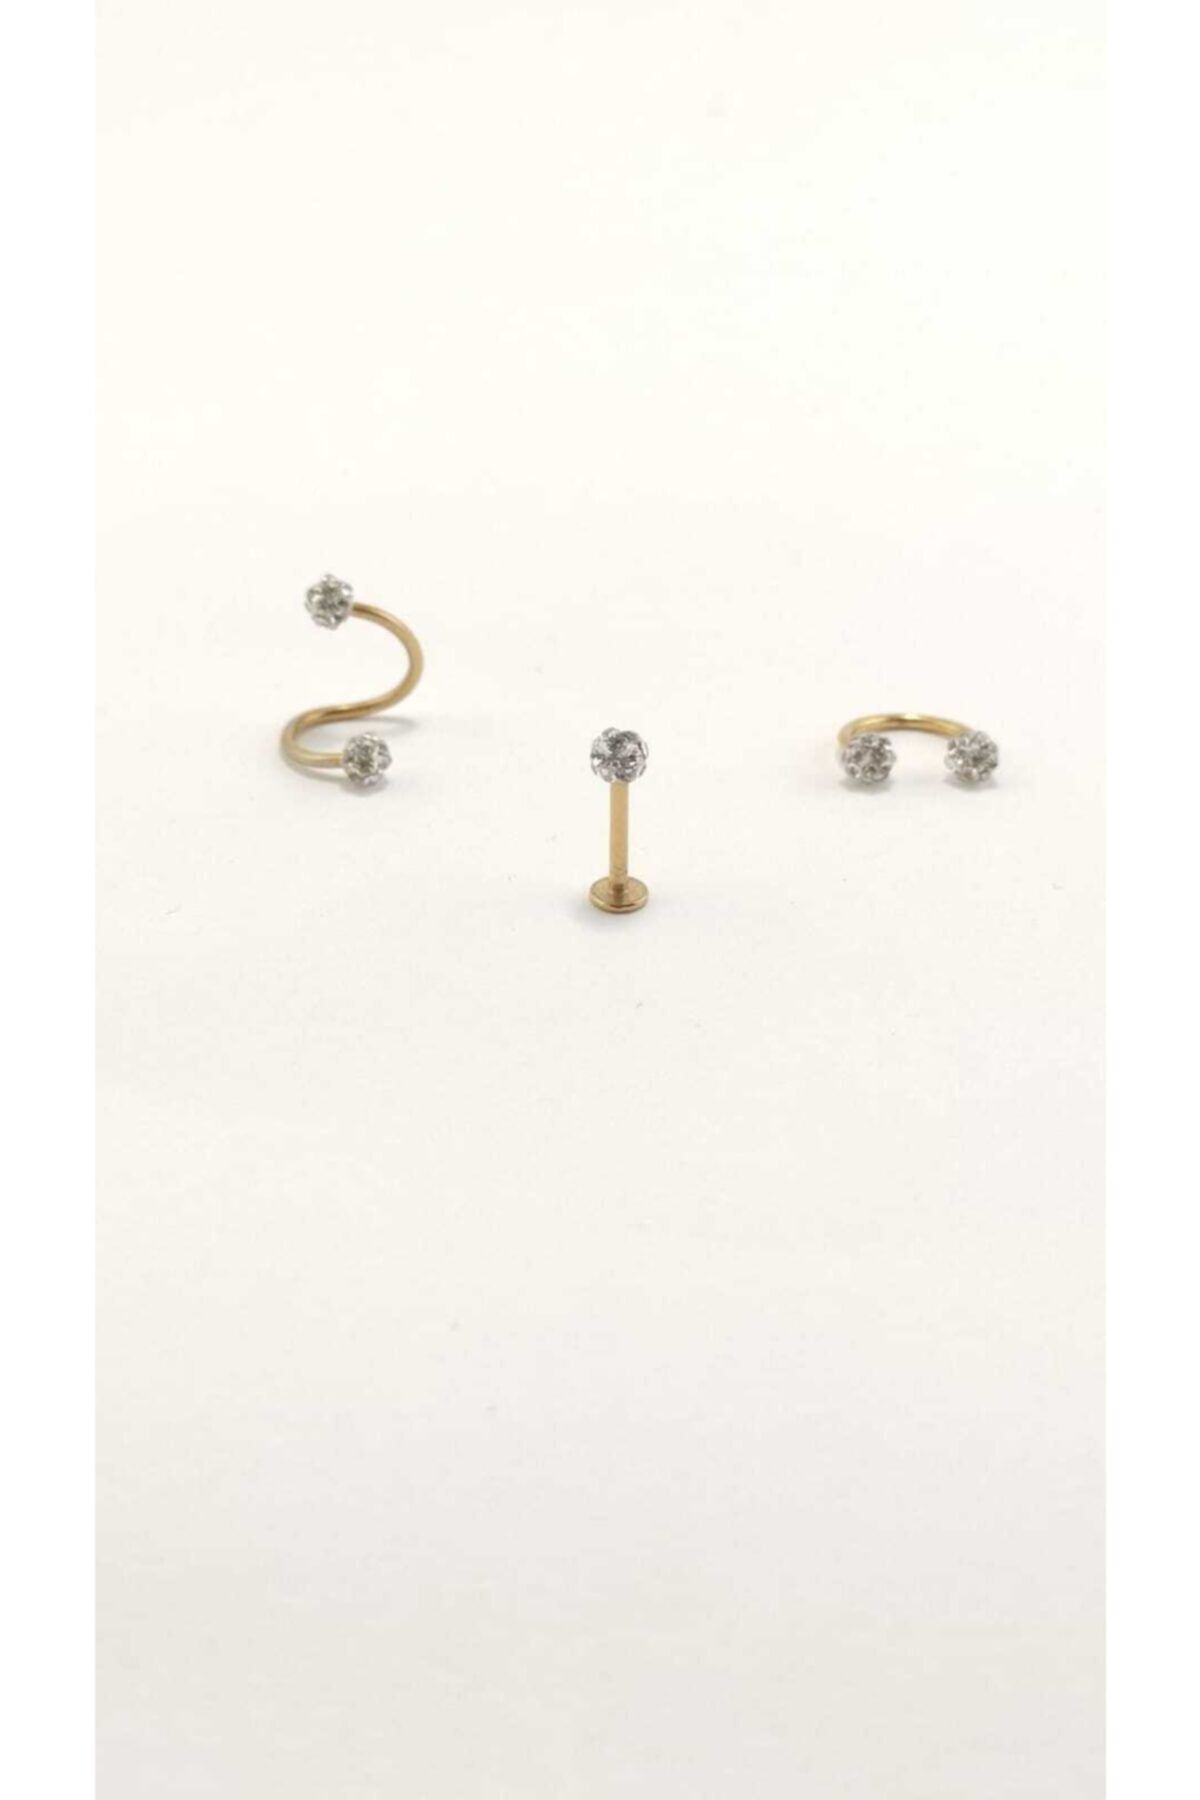 Takıparkxs 316l Cerrahi Çelik 8 Mm Gold Bar Shambala Üçlü Piercing Set (labret,septum,helix)